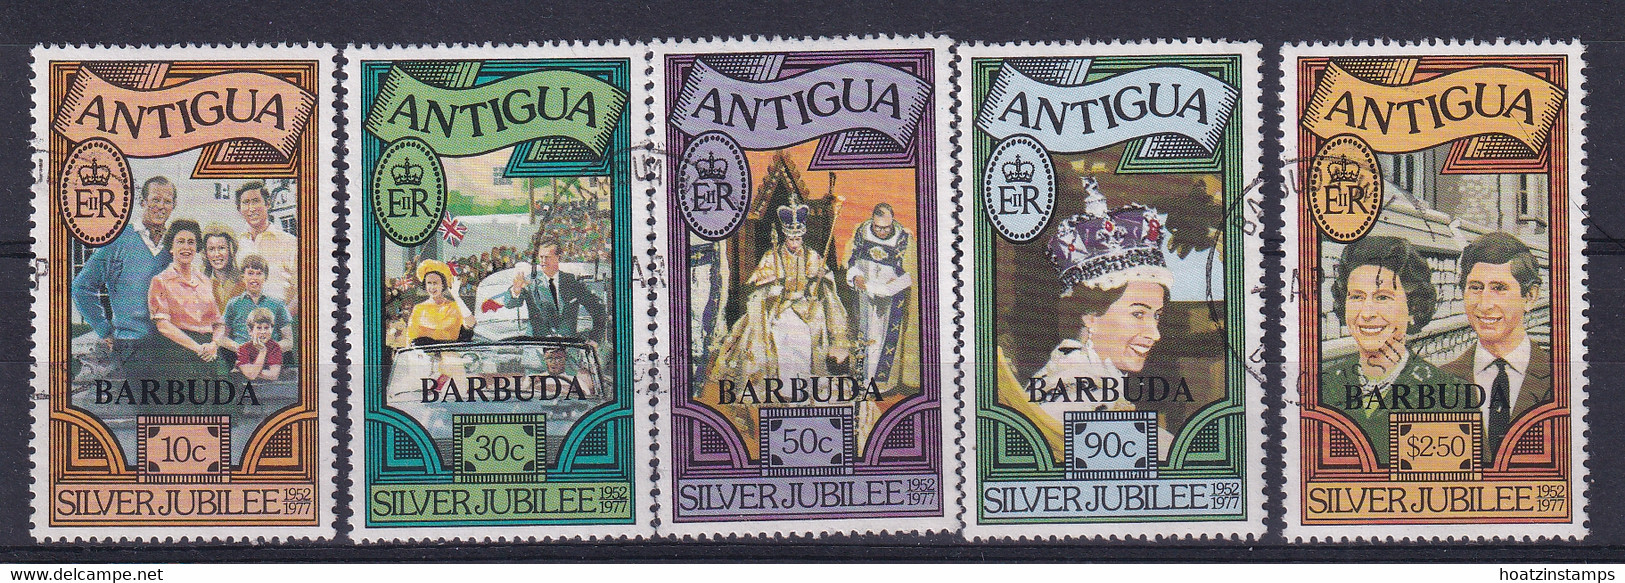 Barbuda: 1977   Silver Jubilee (Issue 2)  'Barbuda' OVPT    Used - Barbuda (...-1981)